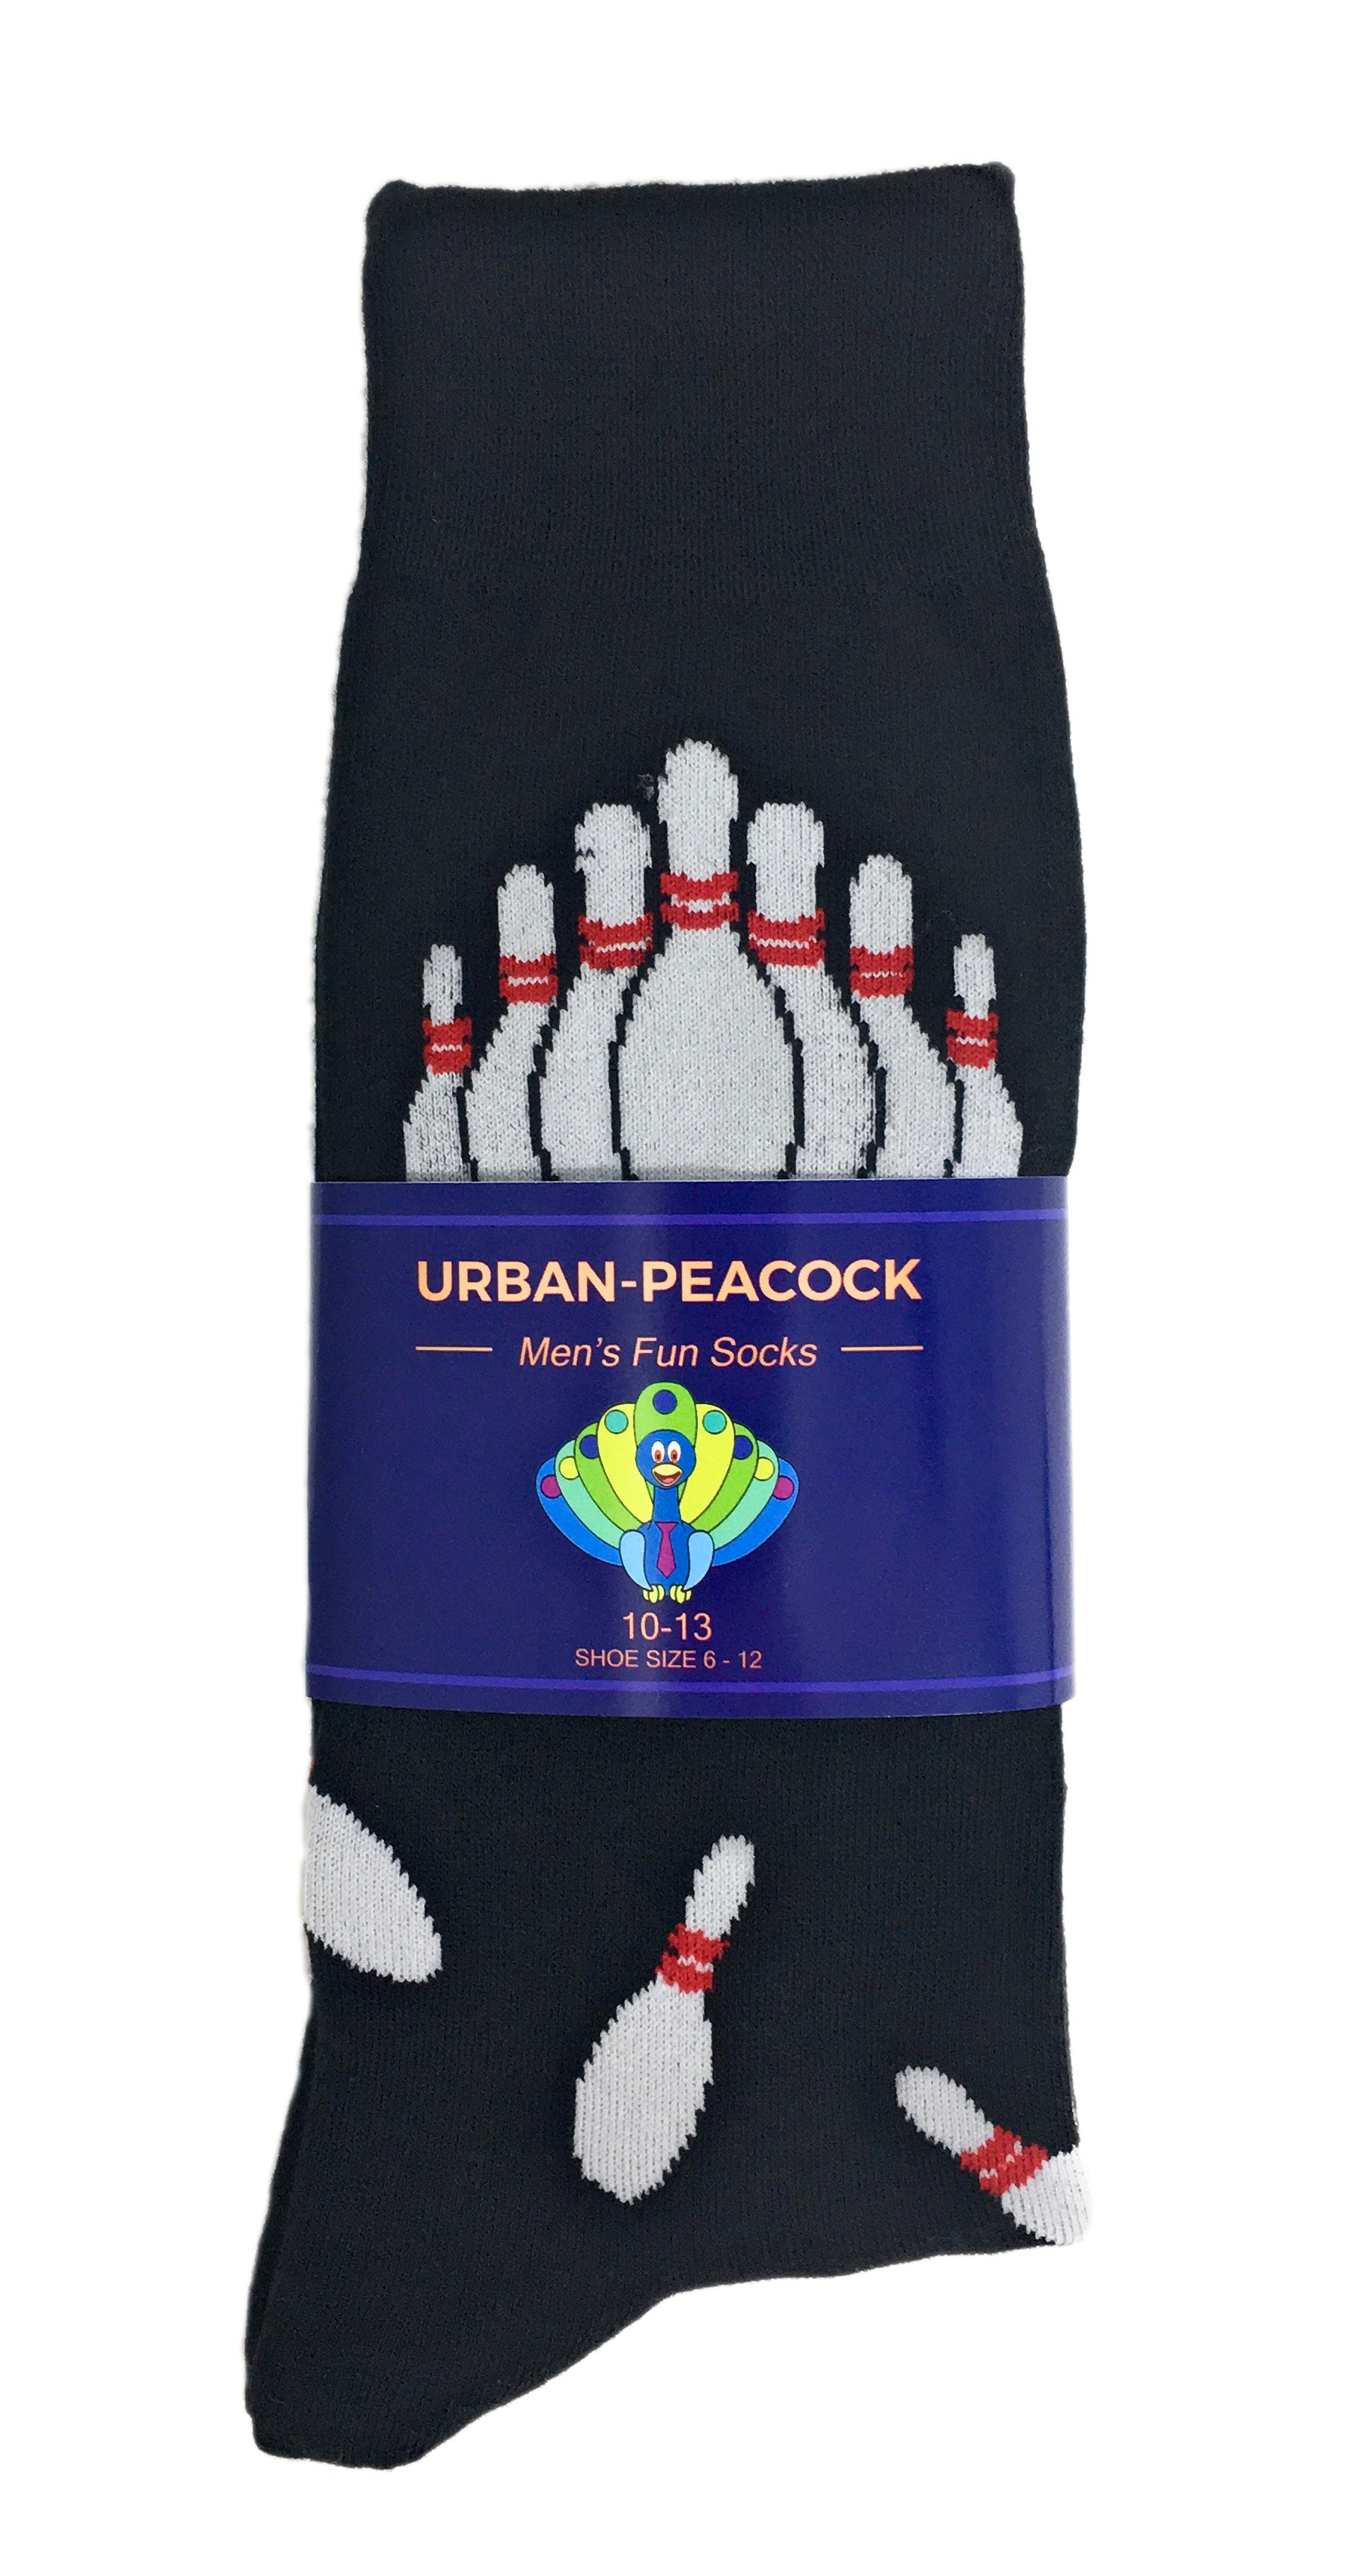 Urban-Peacock Men's Novelty Crew Socks - Bowling Pins - Black